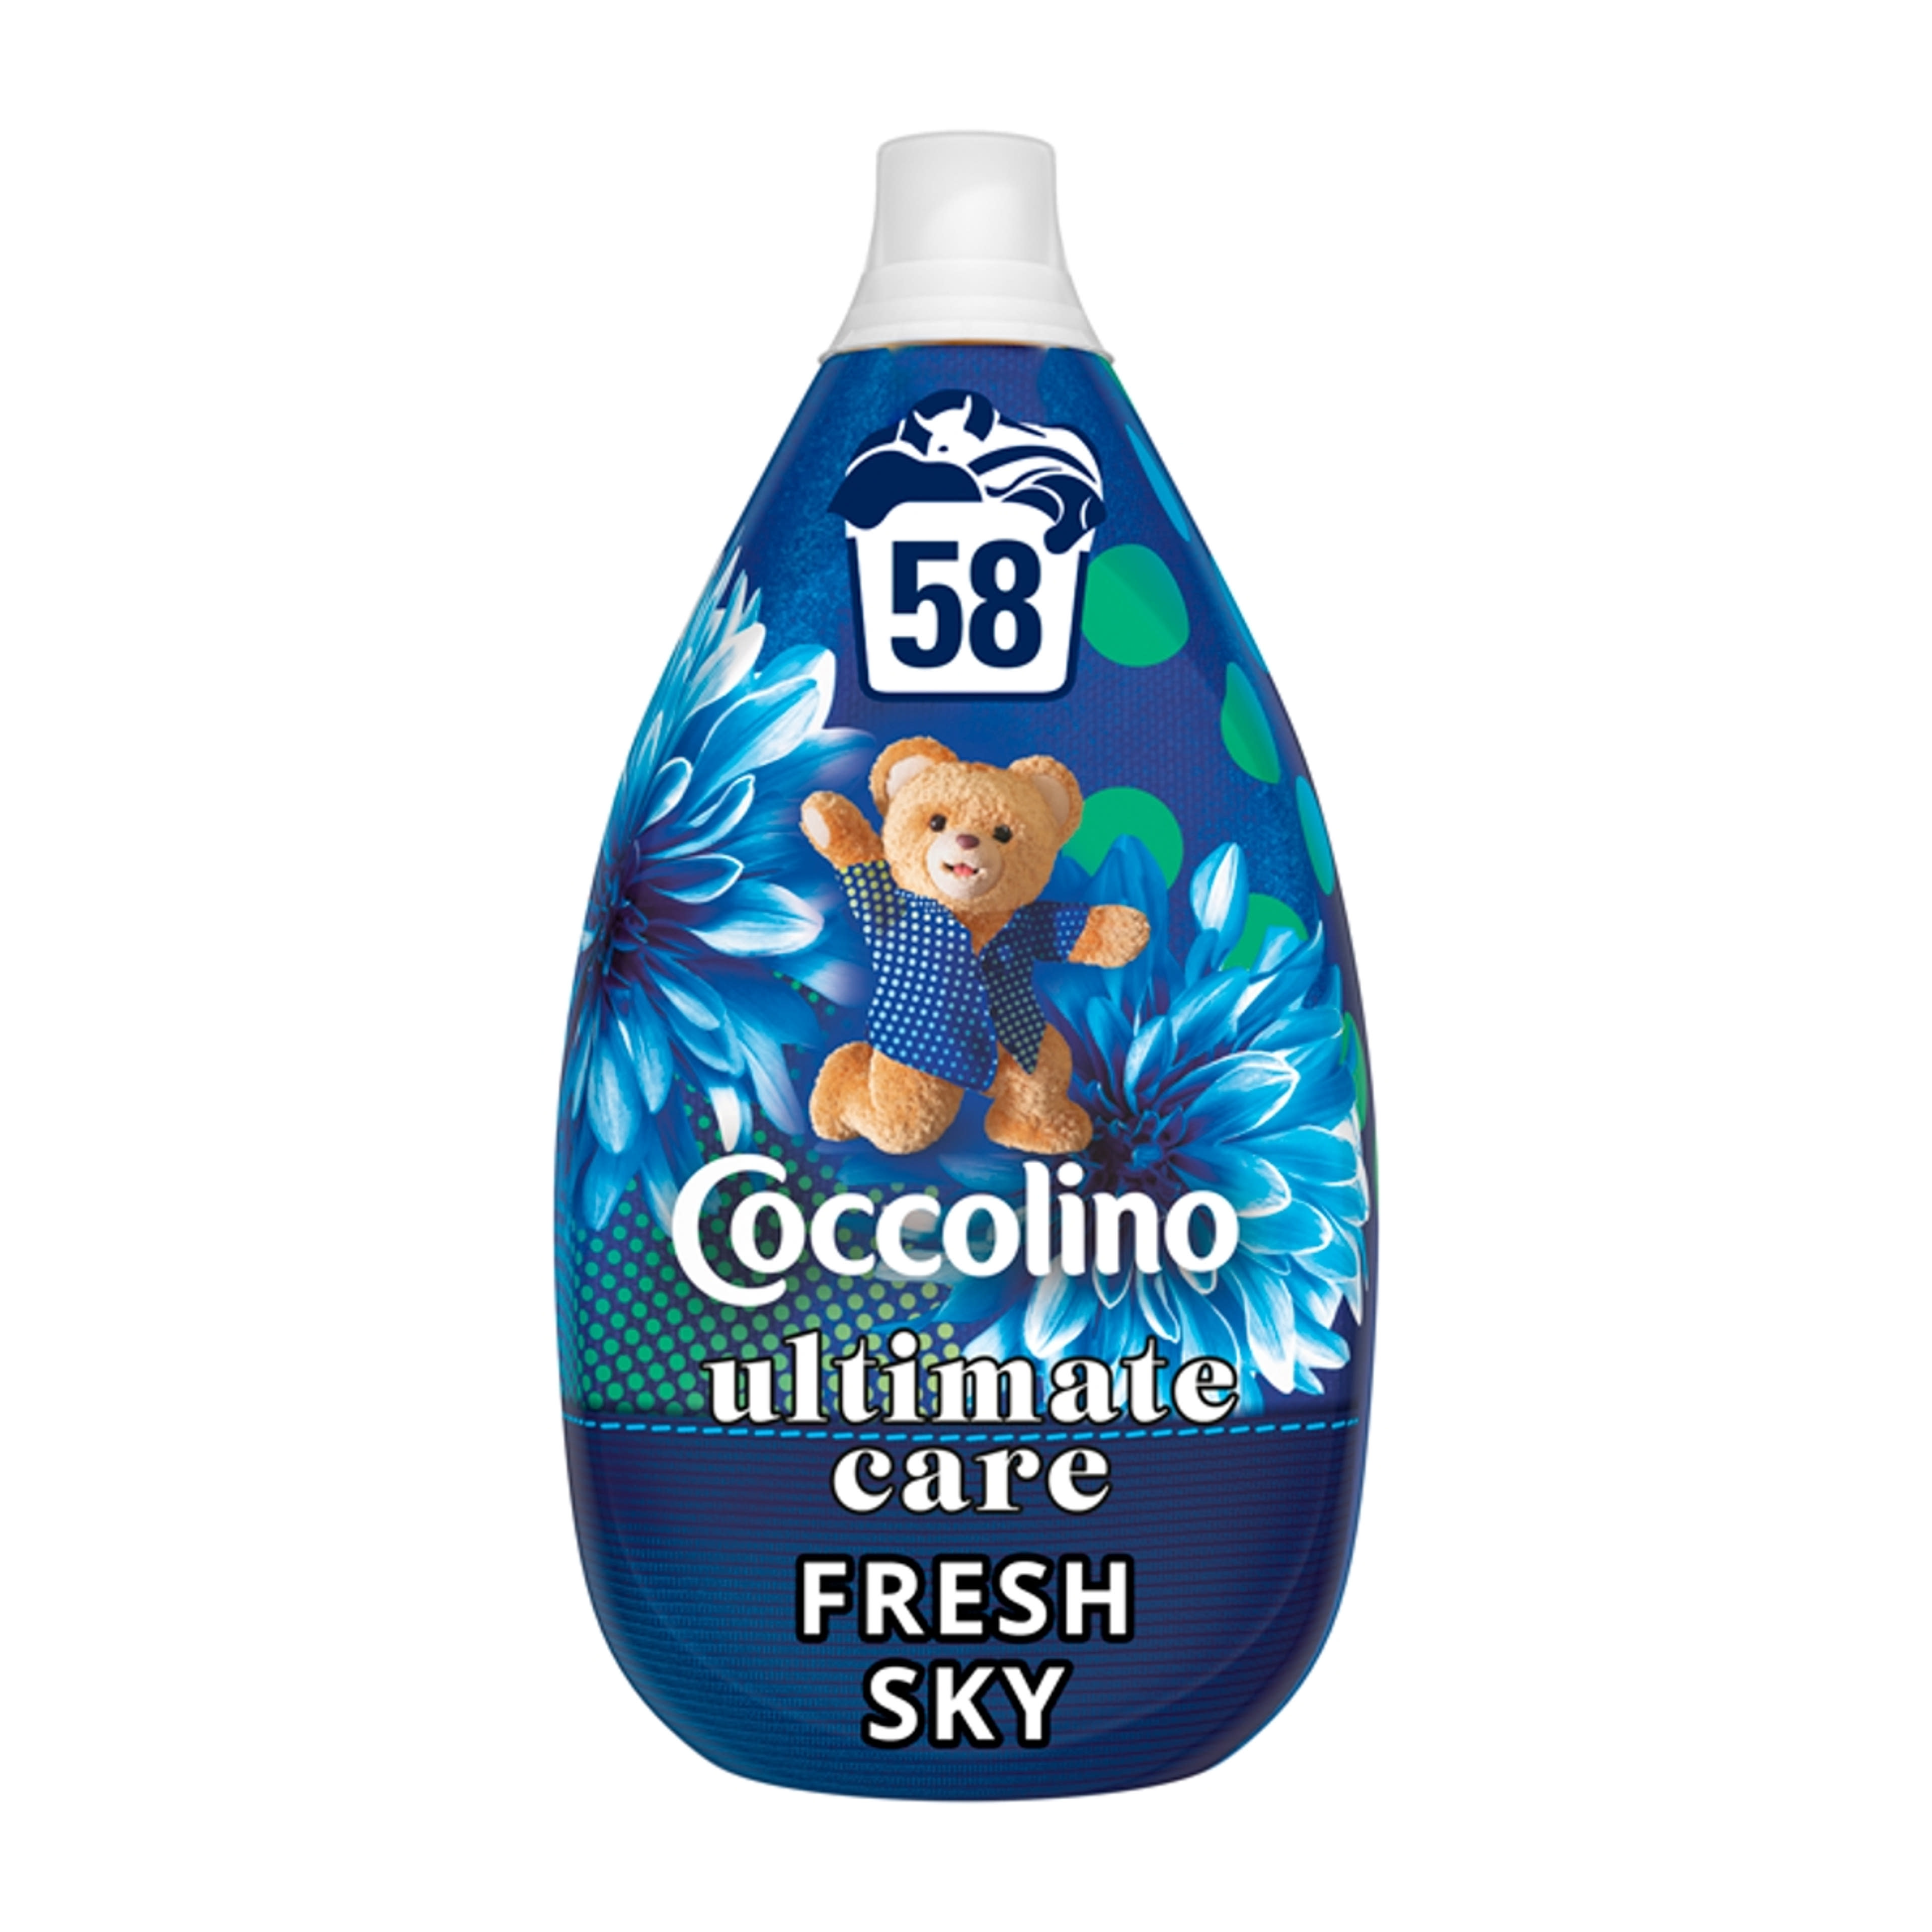 Coccolino Ultimate Care Fresh Sky öblítő 58 mosás - 870 ml-2